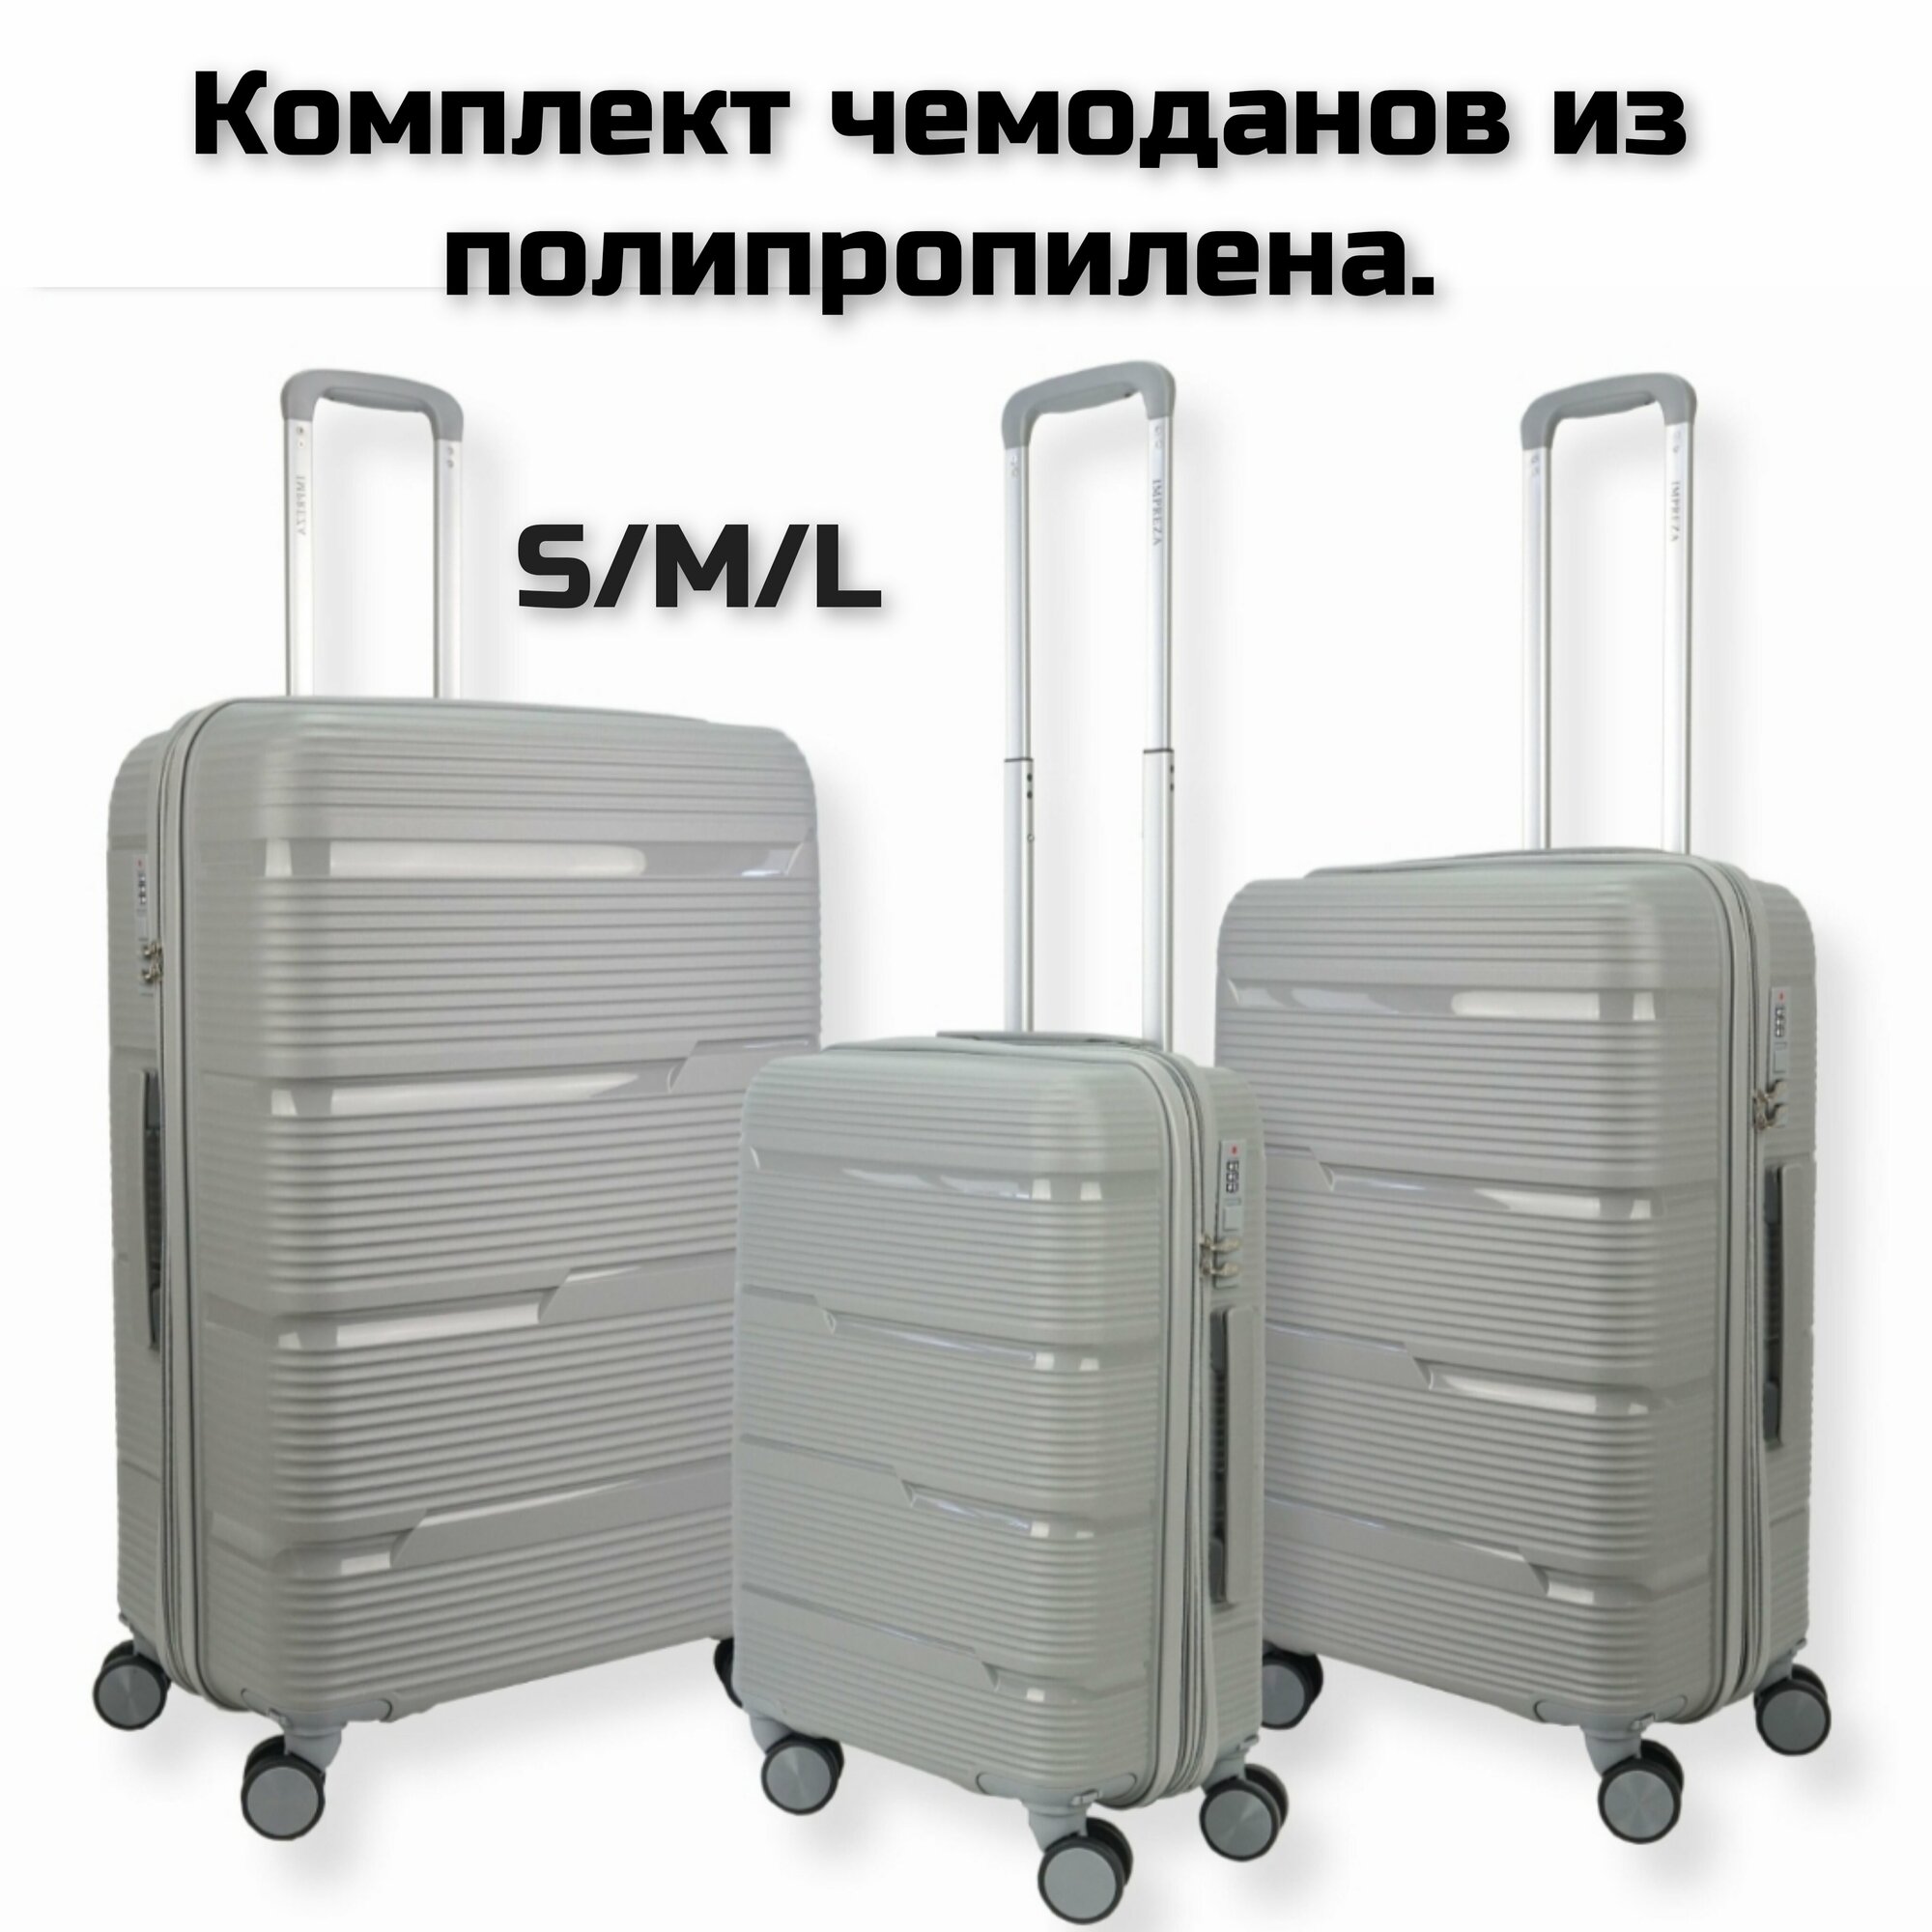 Комплект чемоданов Impreza чемодан светло-серый 